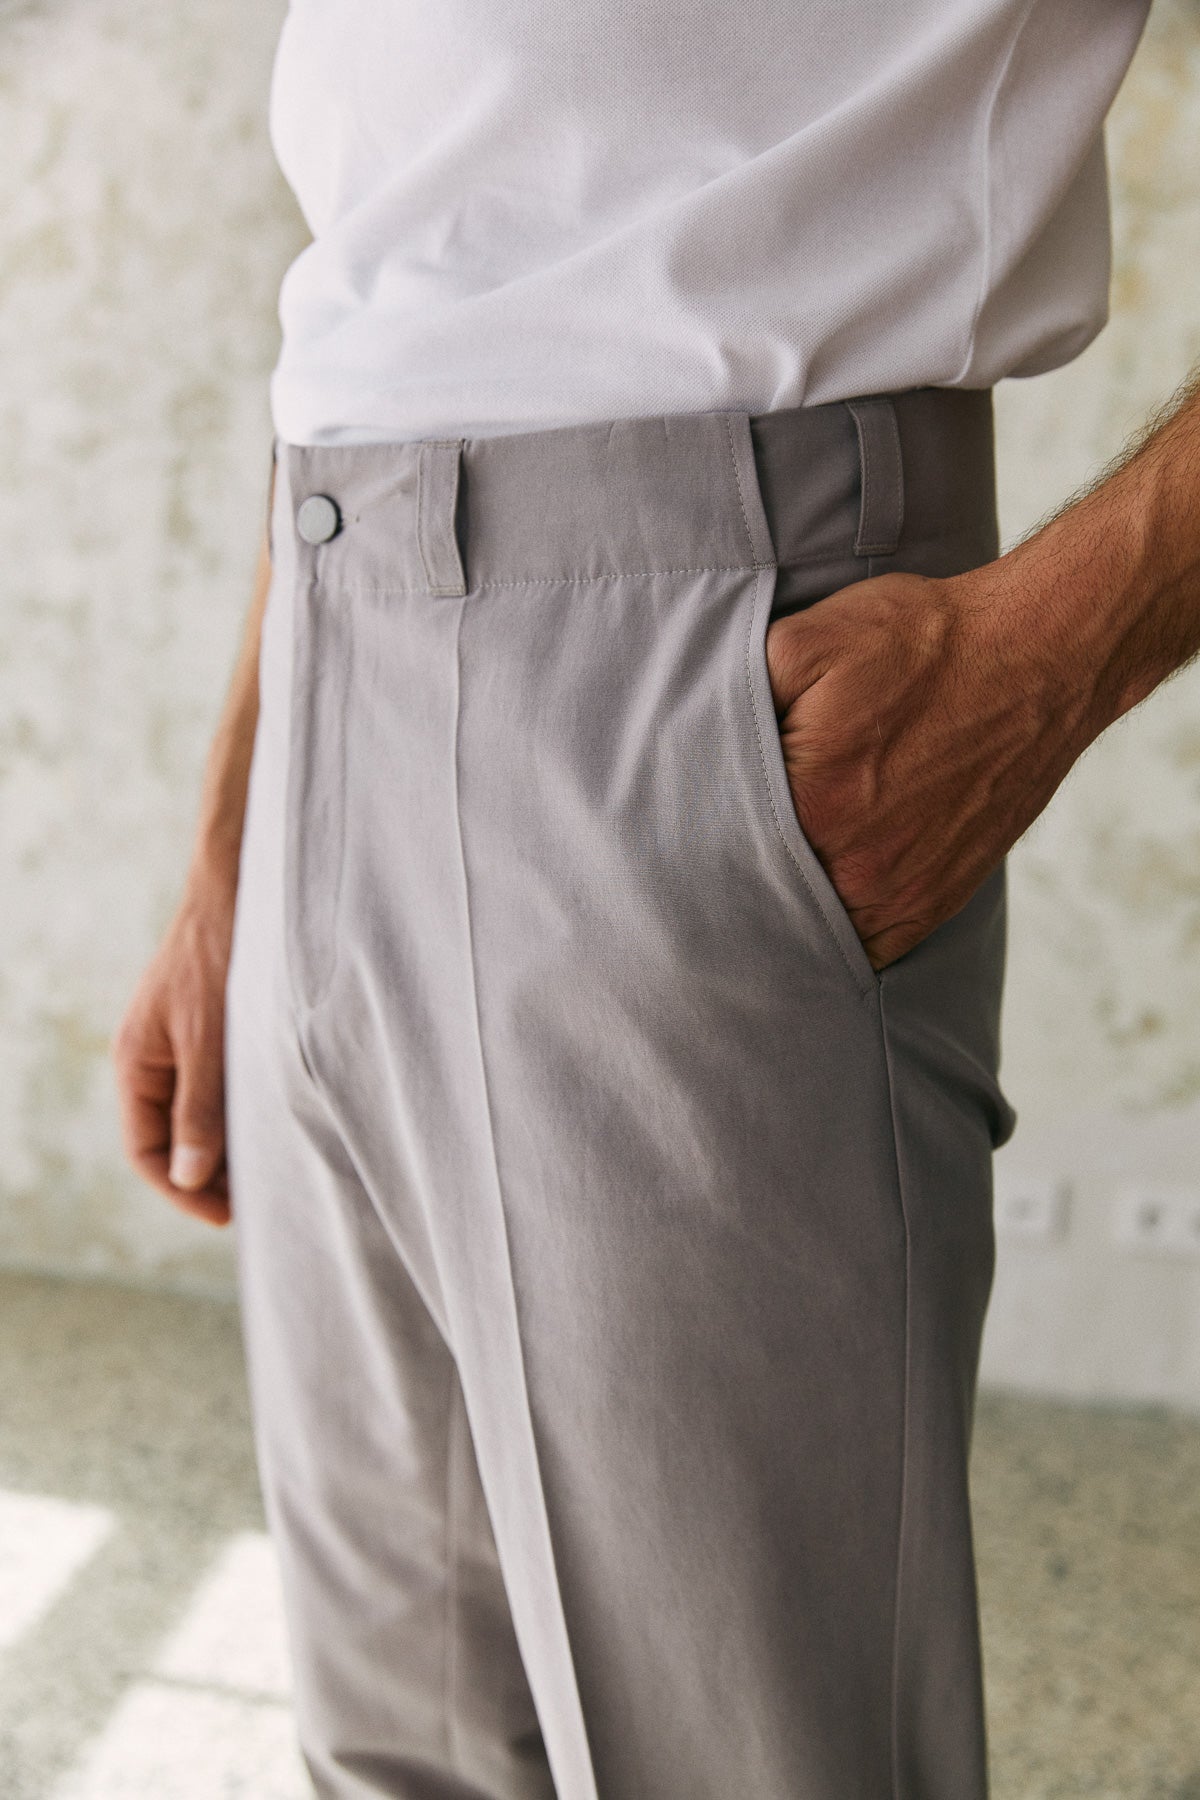 JOSTHA trousers stone grey tencel